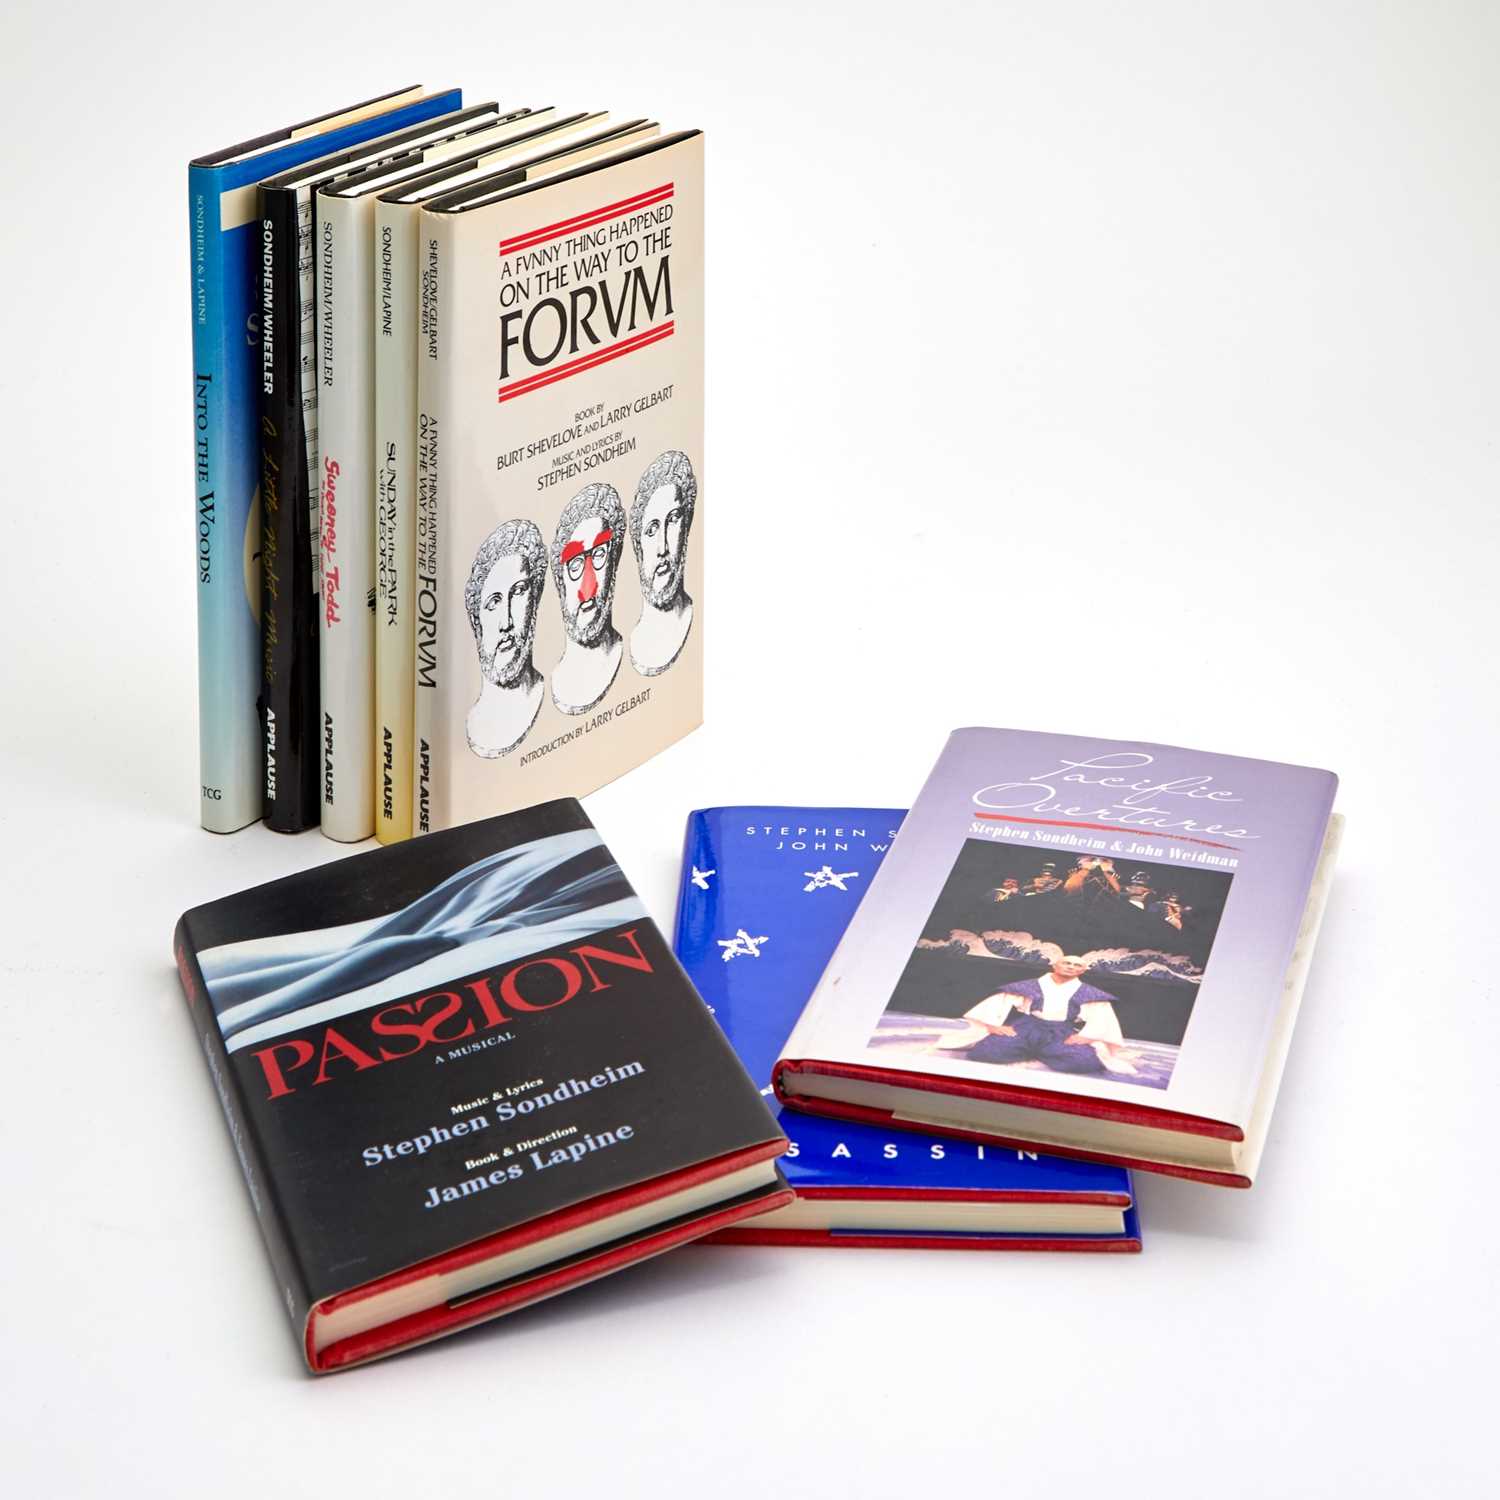 Lot 292 - Eight hardcover book editions of Stephen Sondheim musicals